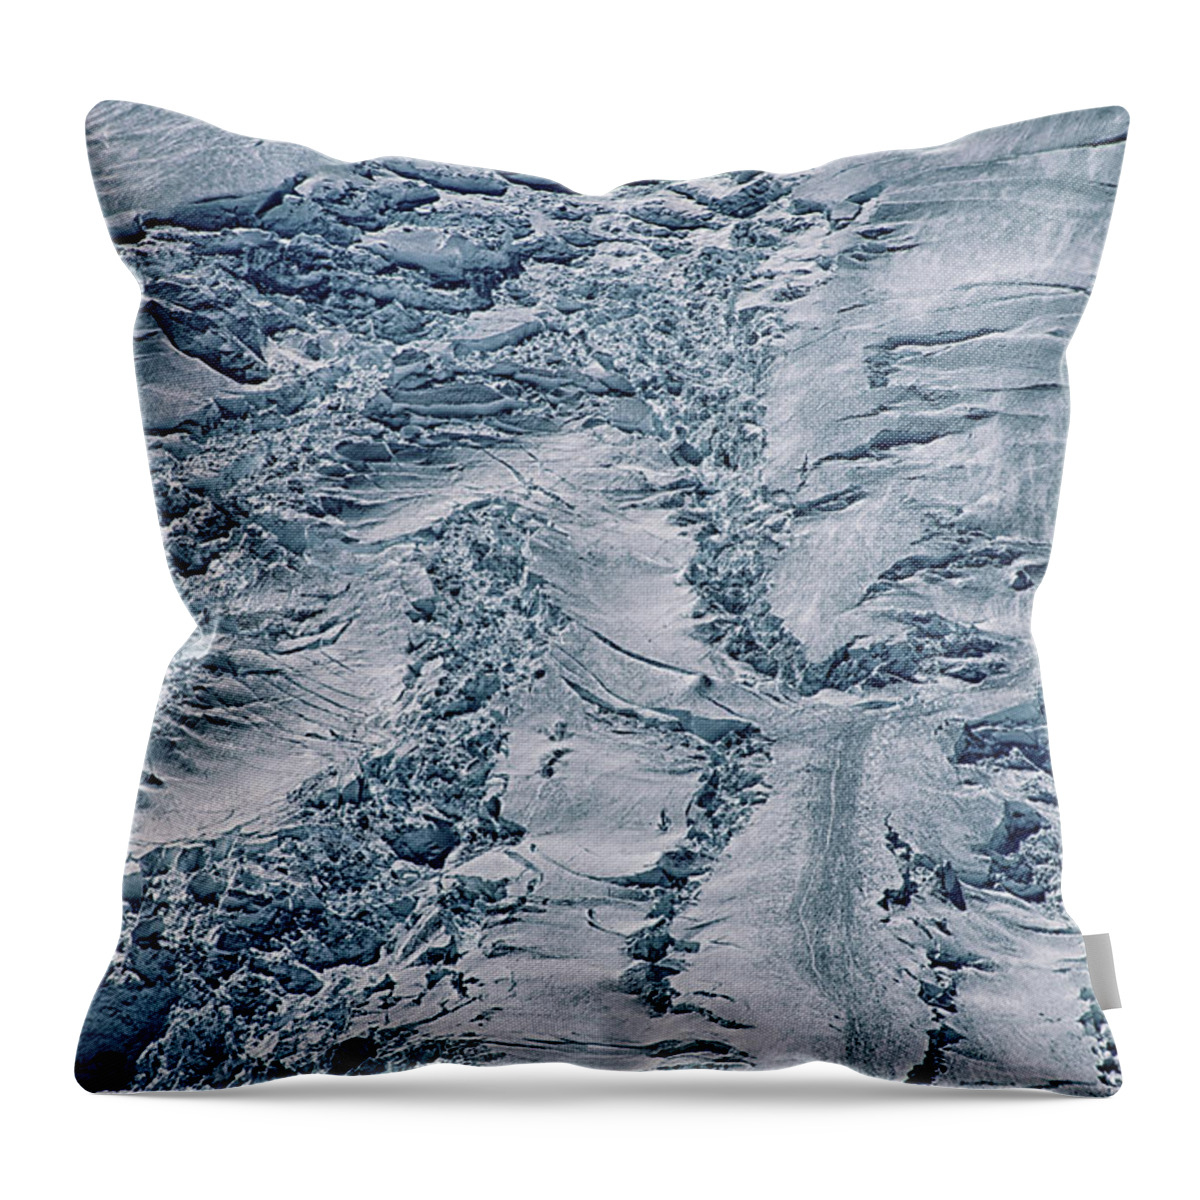 Emmons Throw Pillow featuring the photograph Emmons Glacier on Mount Rainier by Steve Estvanik